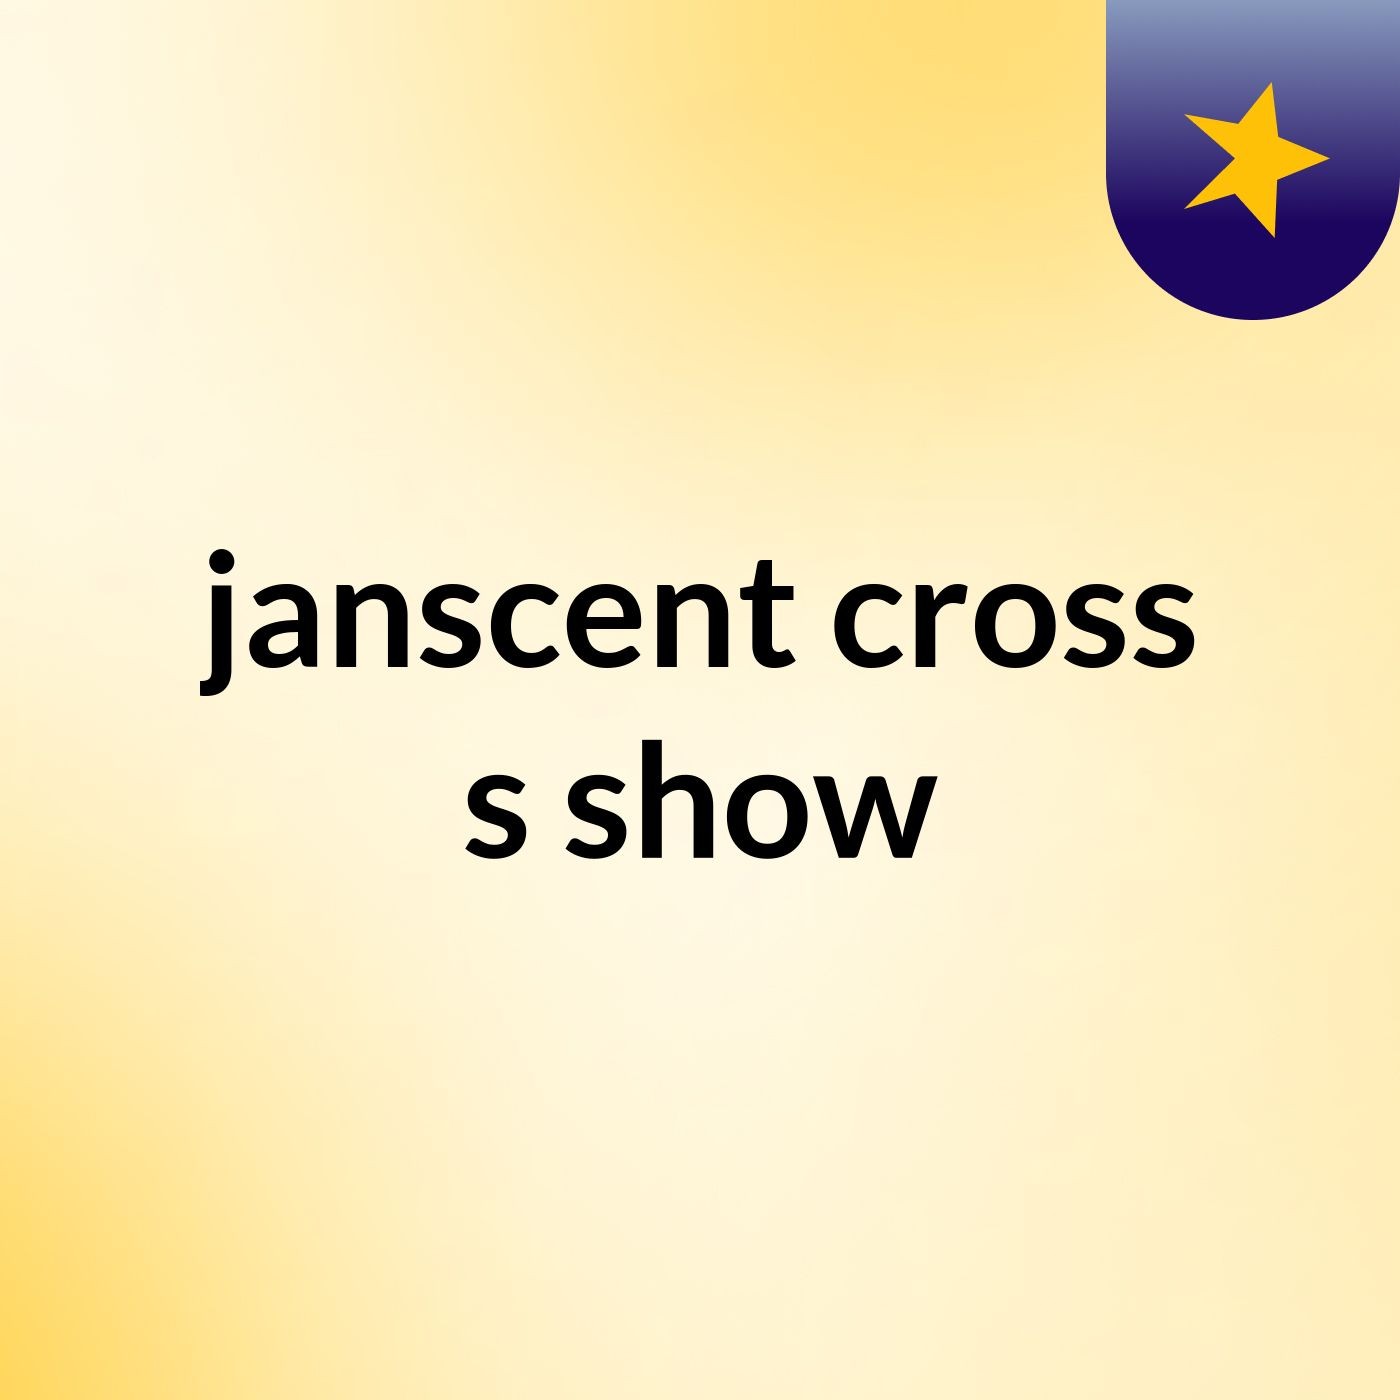 janscent cross's show